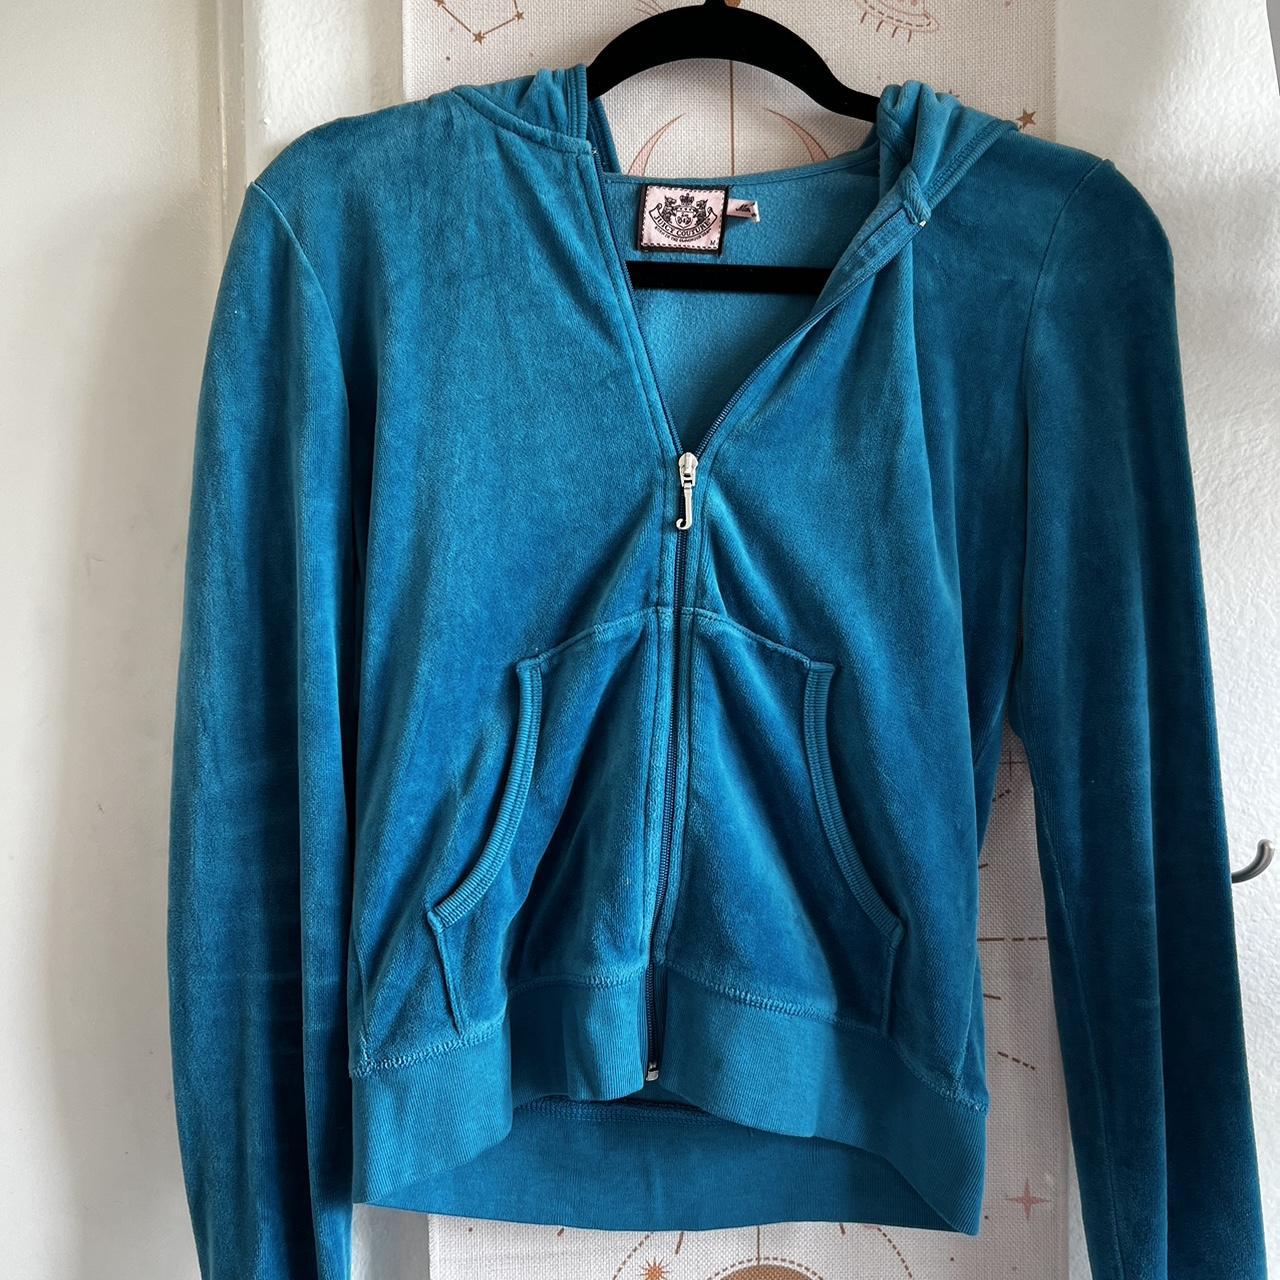 Juicy Couture Blue zip up jacket🤍 jacket of my... - Depop